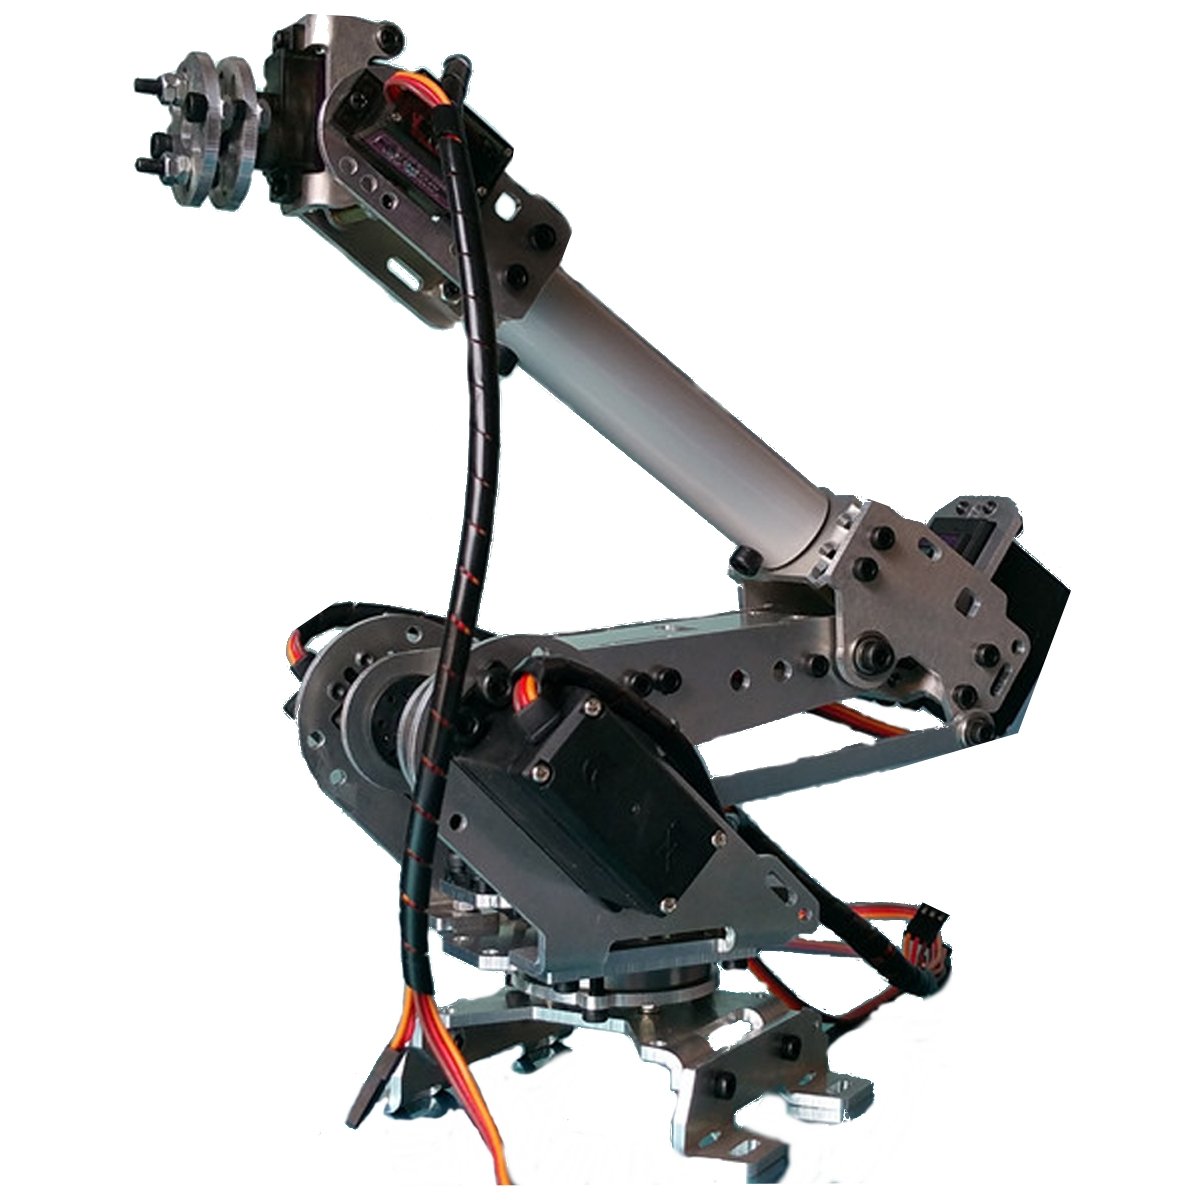 6DOF Mechanical Robot Arm Claw With Servos For Robotics Arduino DIY Kit 1